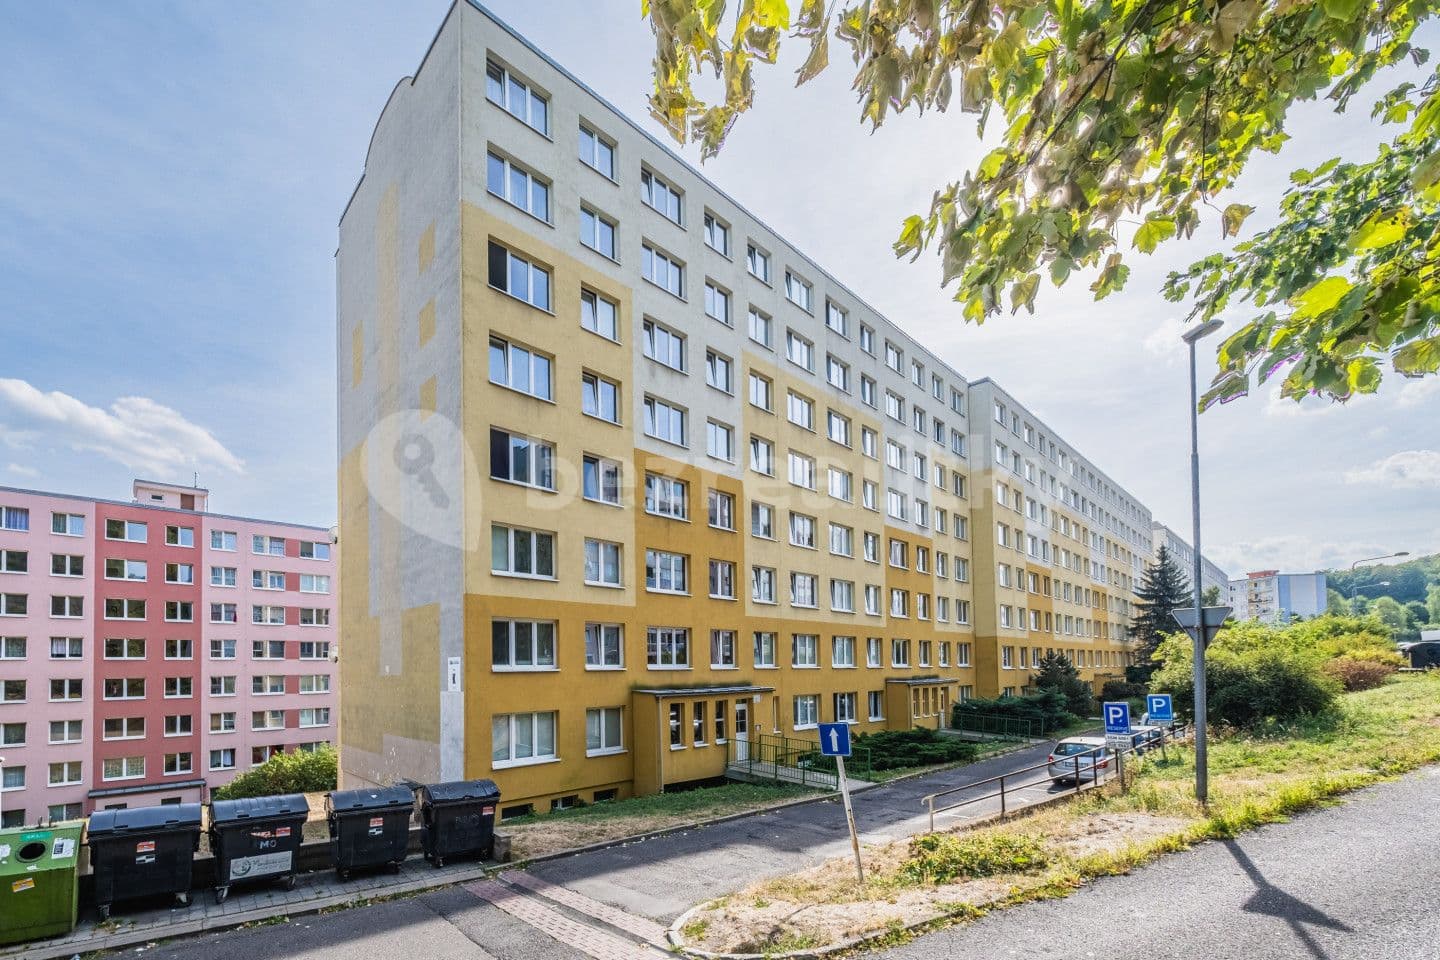 4 bedroom flat for sale, 85 m², Luční, Litvínov, Ústecký Region